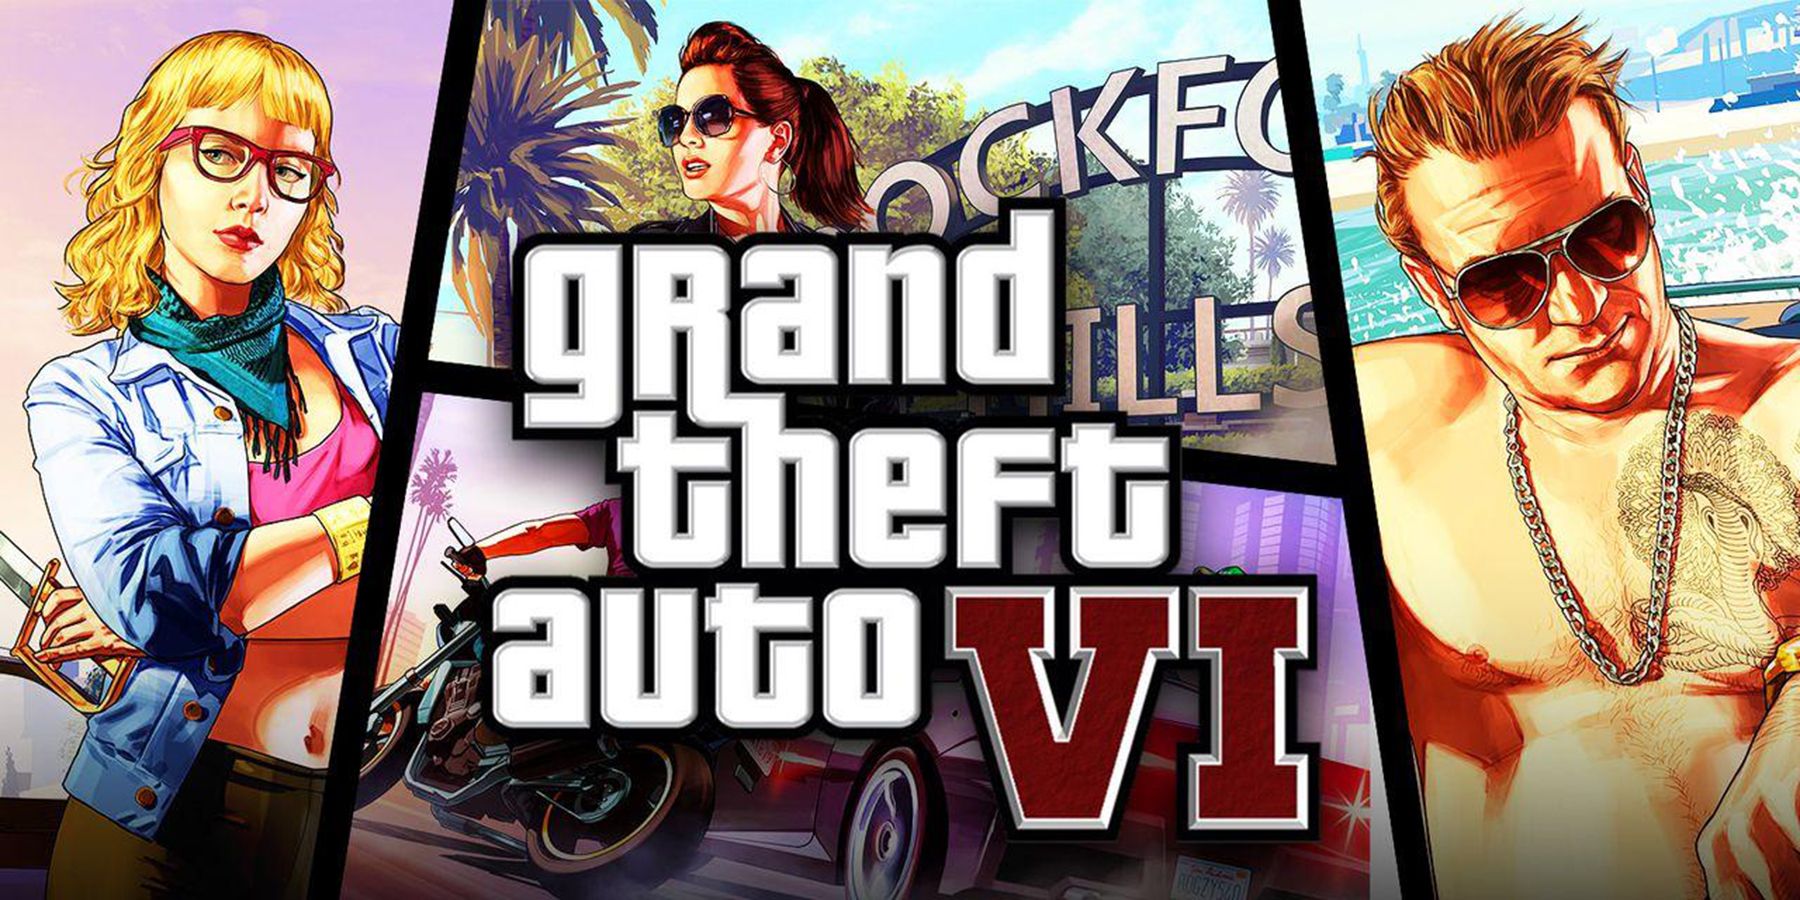 Grand Theft Auto VI Leak Reveals Early Gameplay, Rockstar